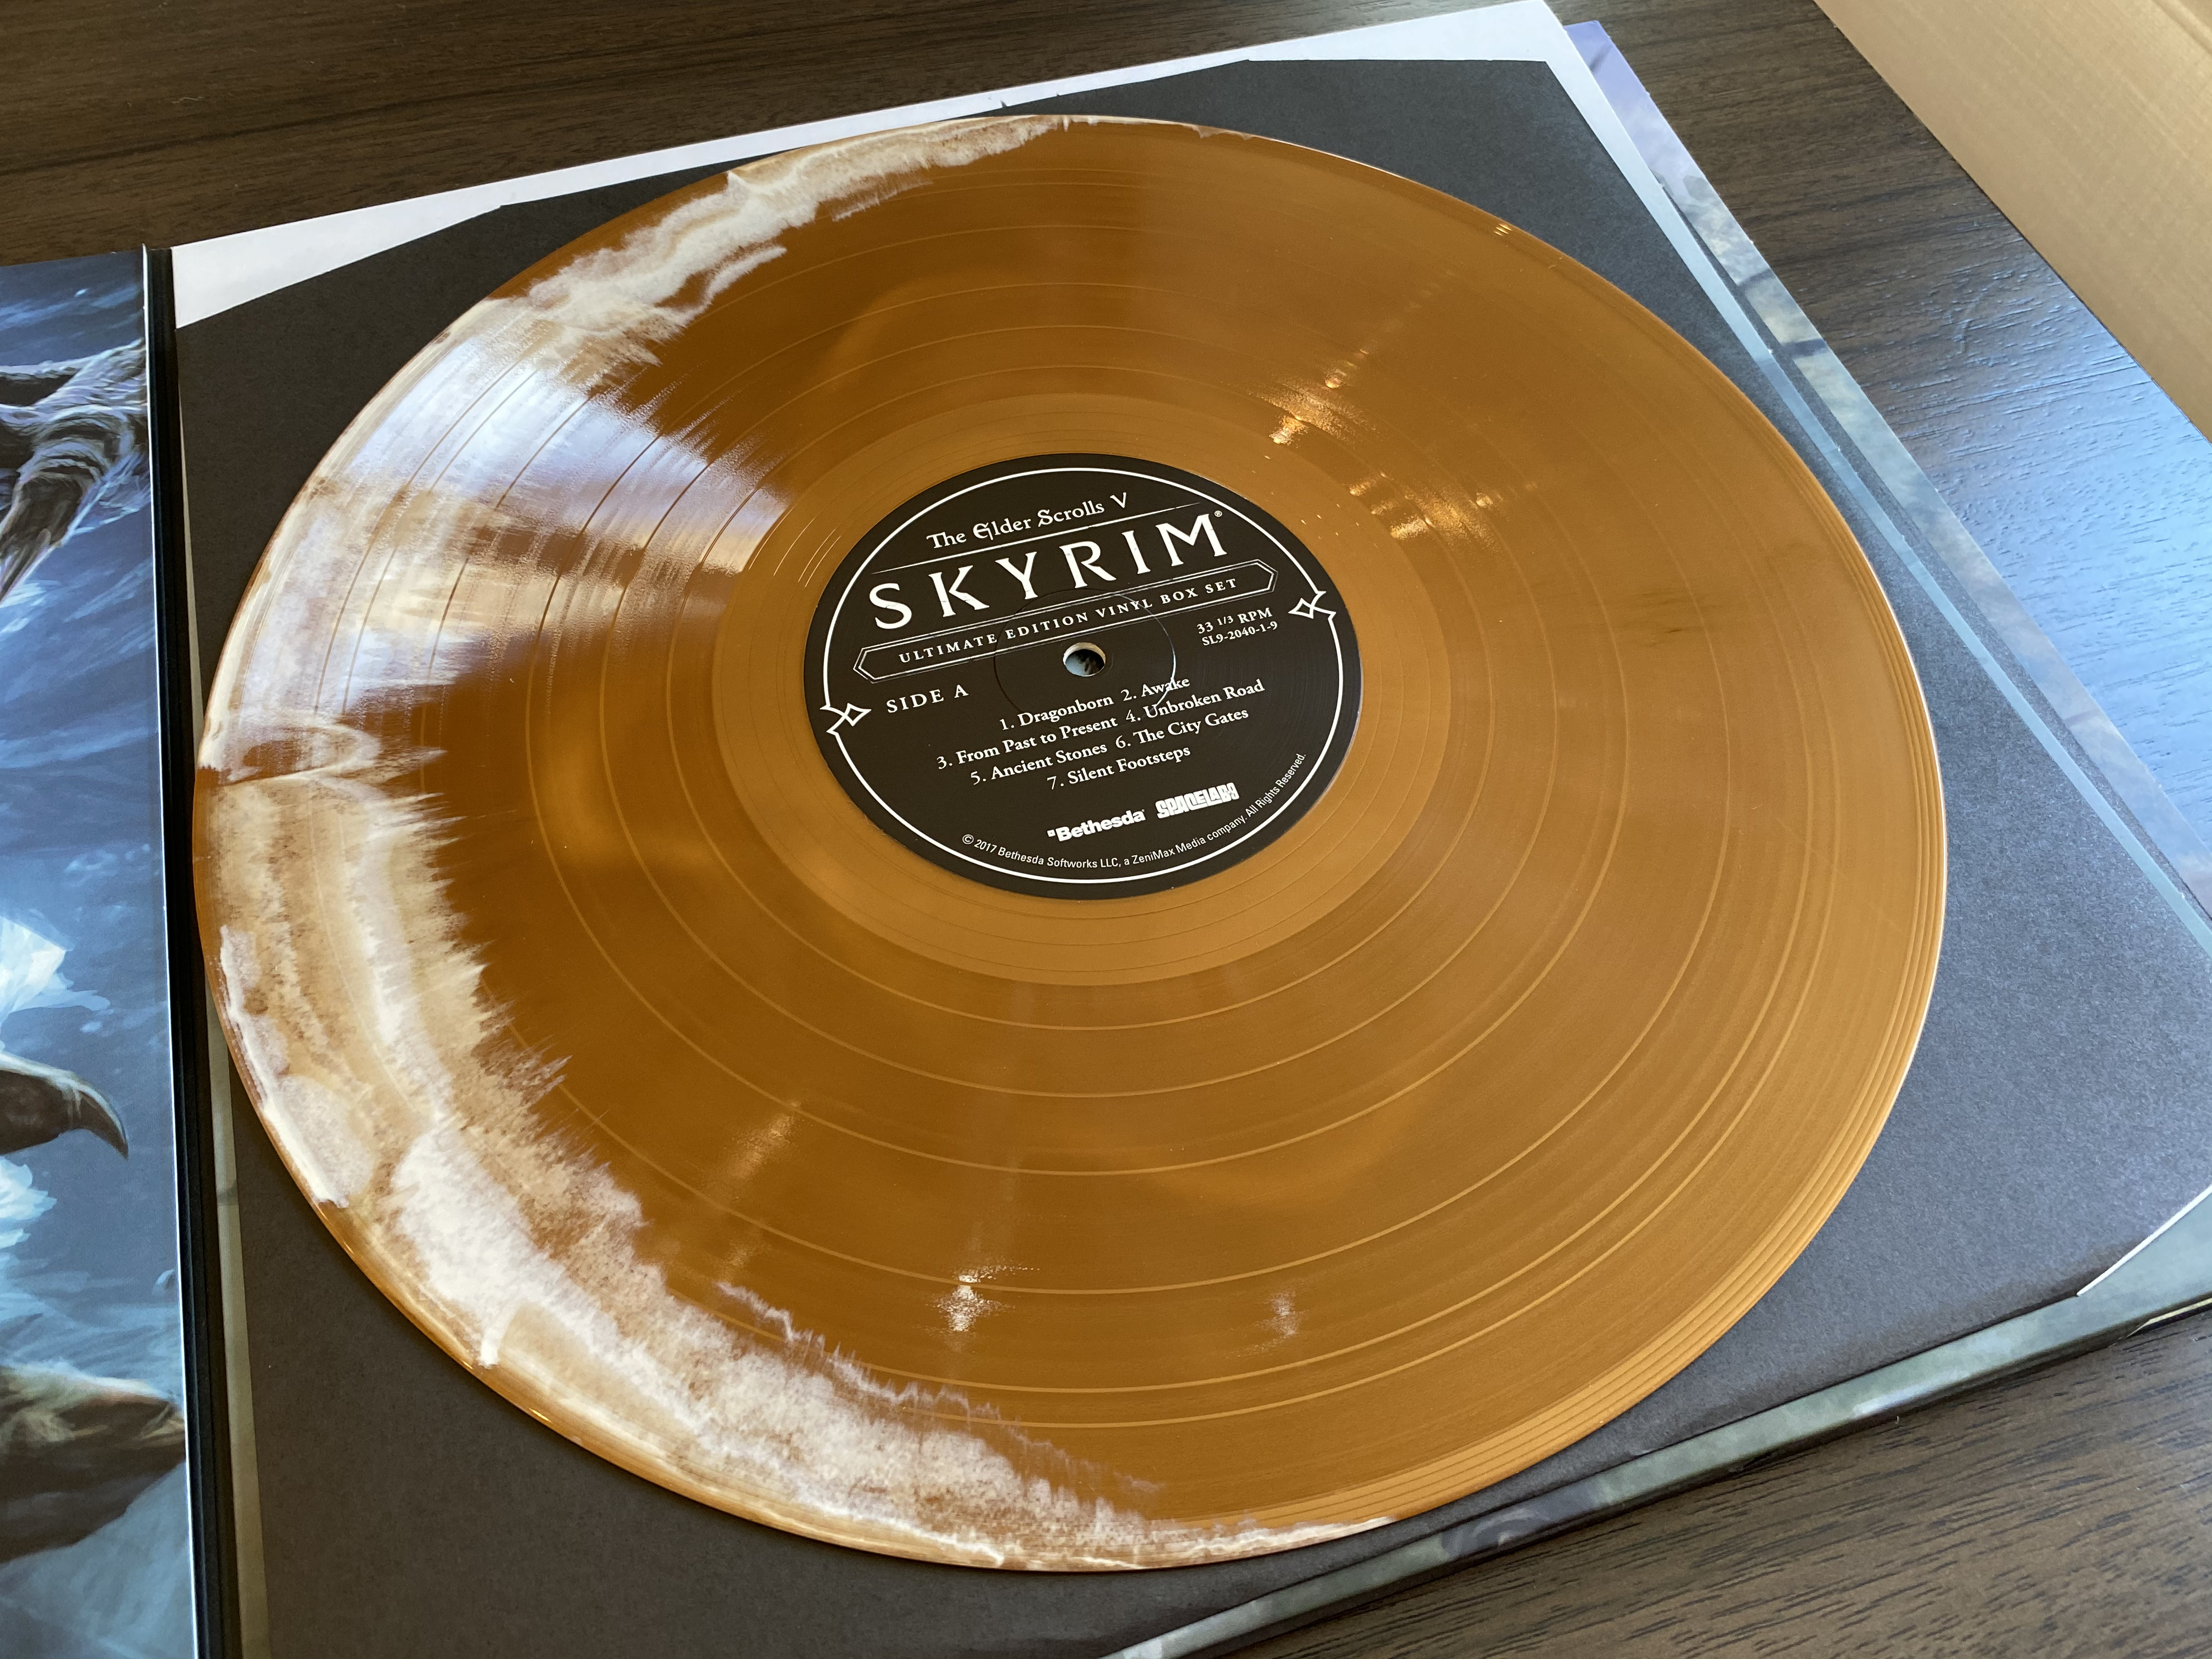 Kennon-Green Elder Scrolls V Skyrim Ultimate Edition Vinyl Box Set Sweet Roll Comic Con Limited LP - Side A